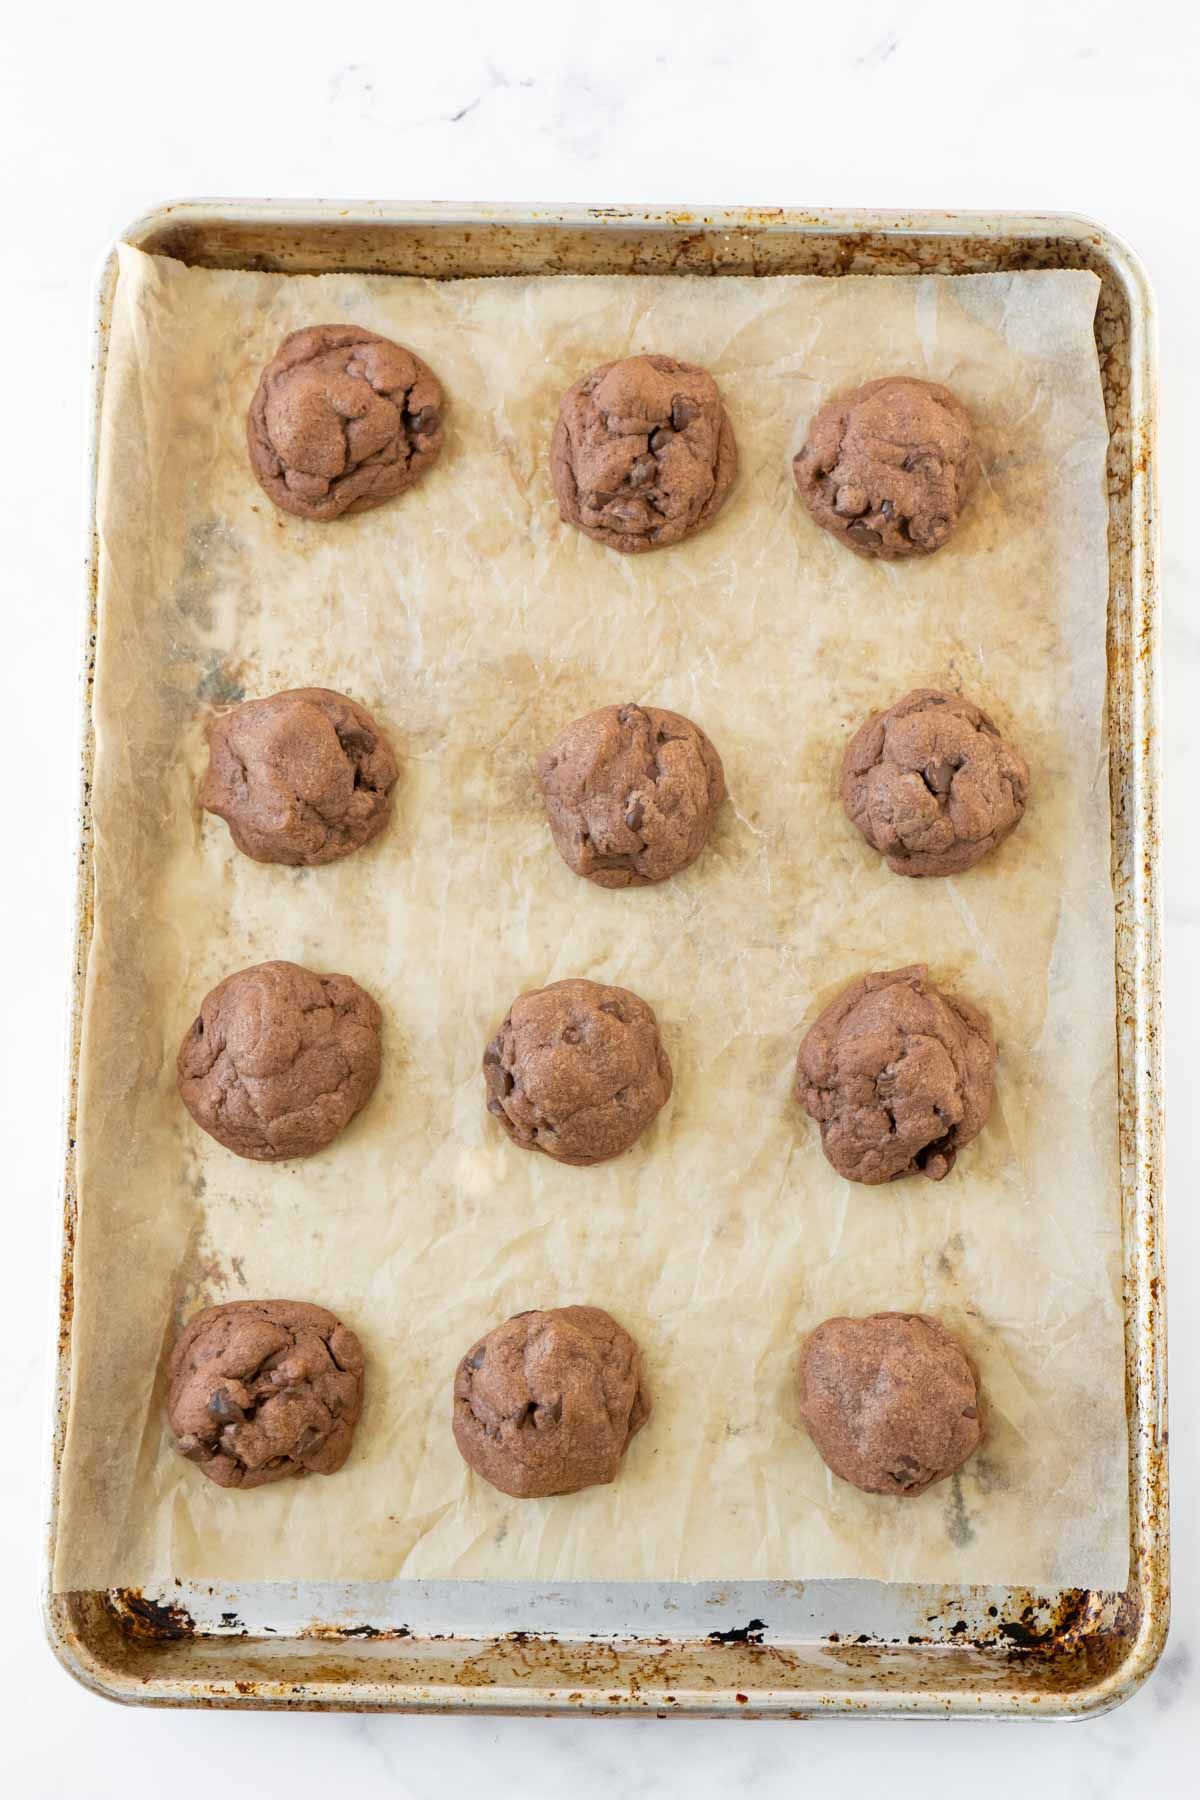 čokoládové pudinkové sušenky v řadách na plechu na pečení